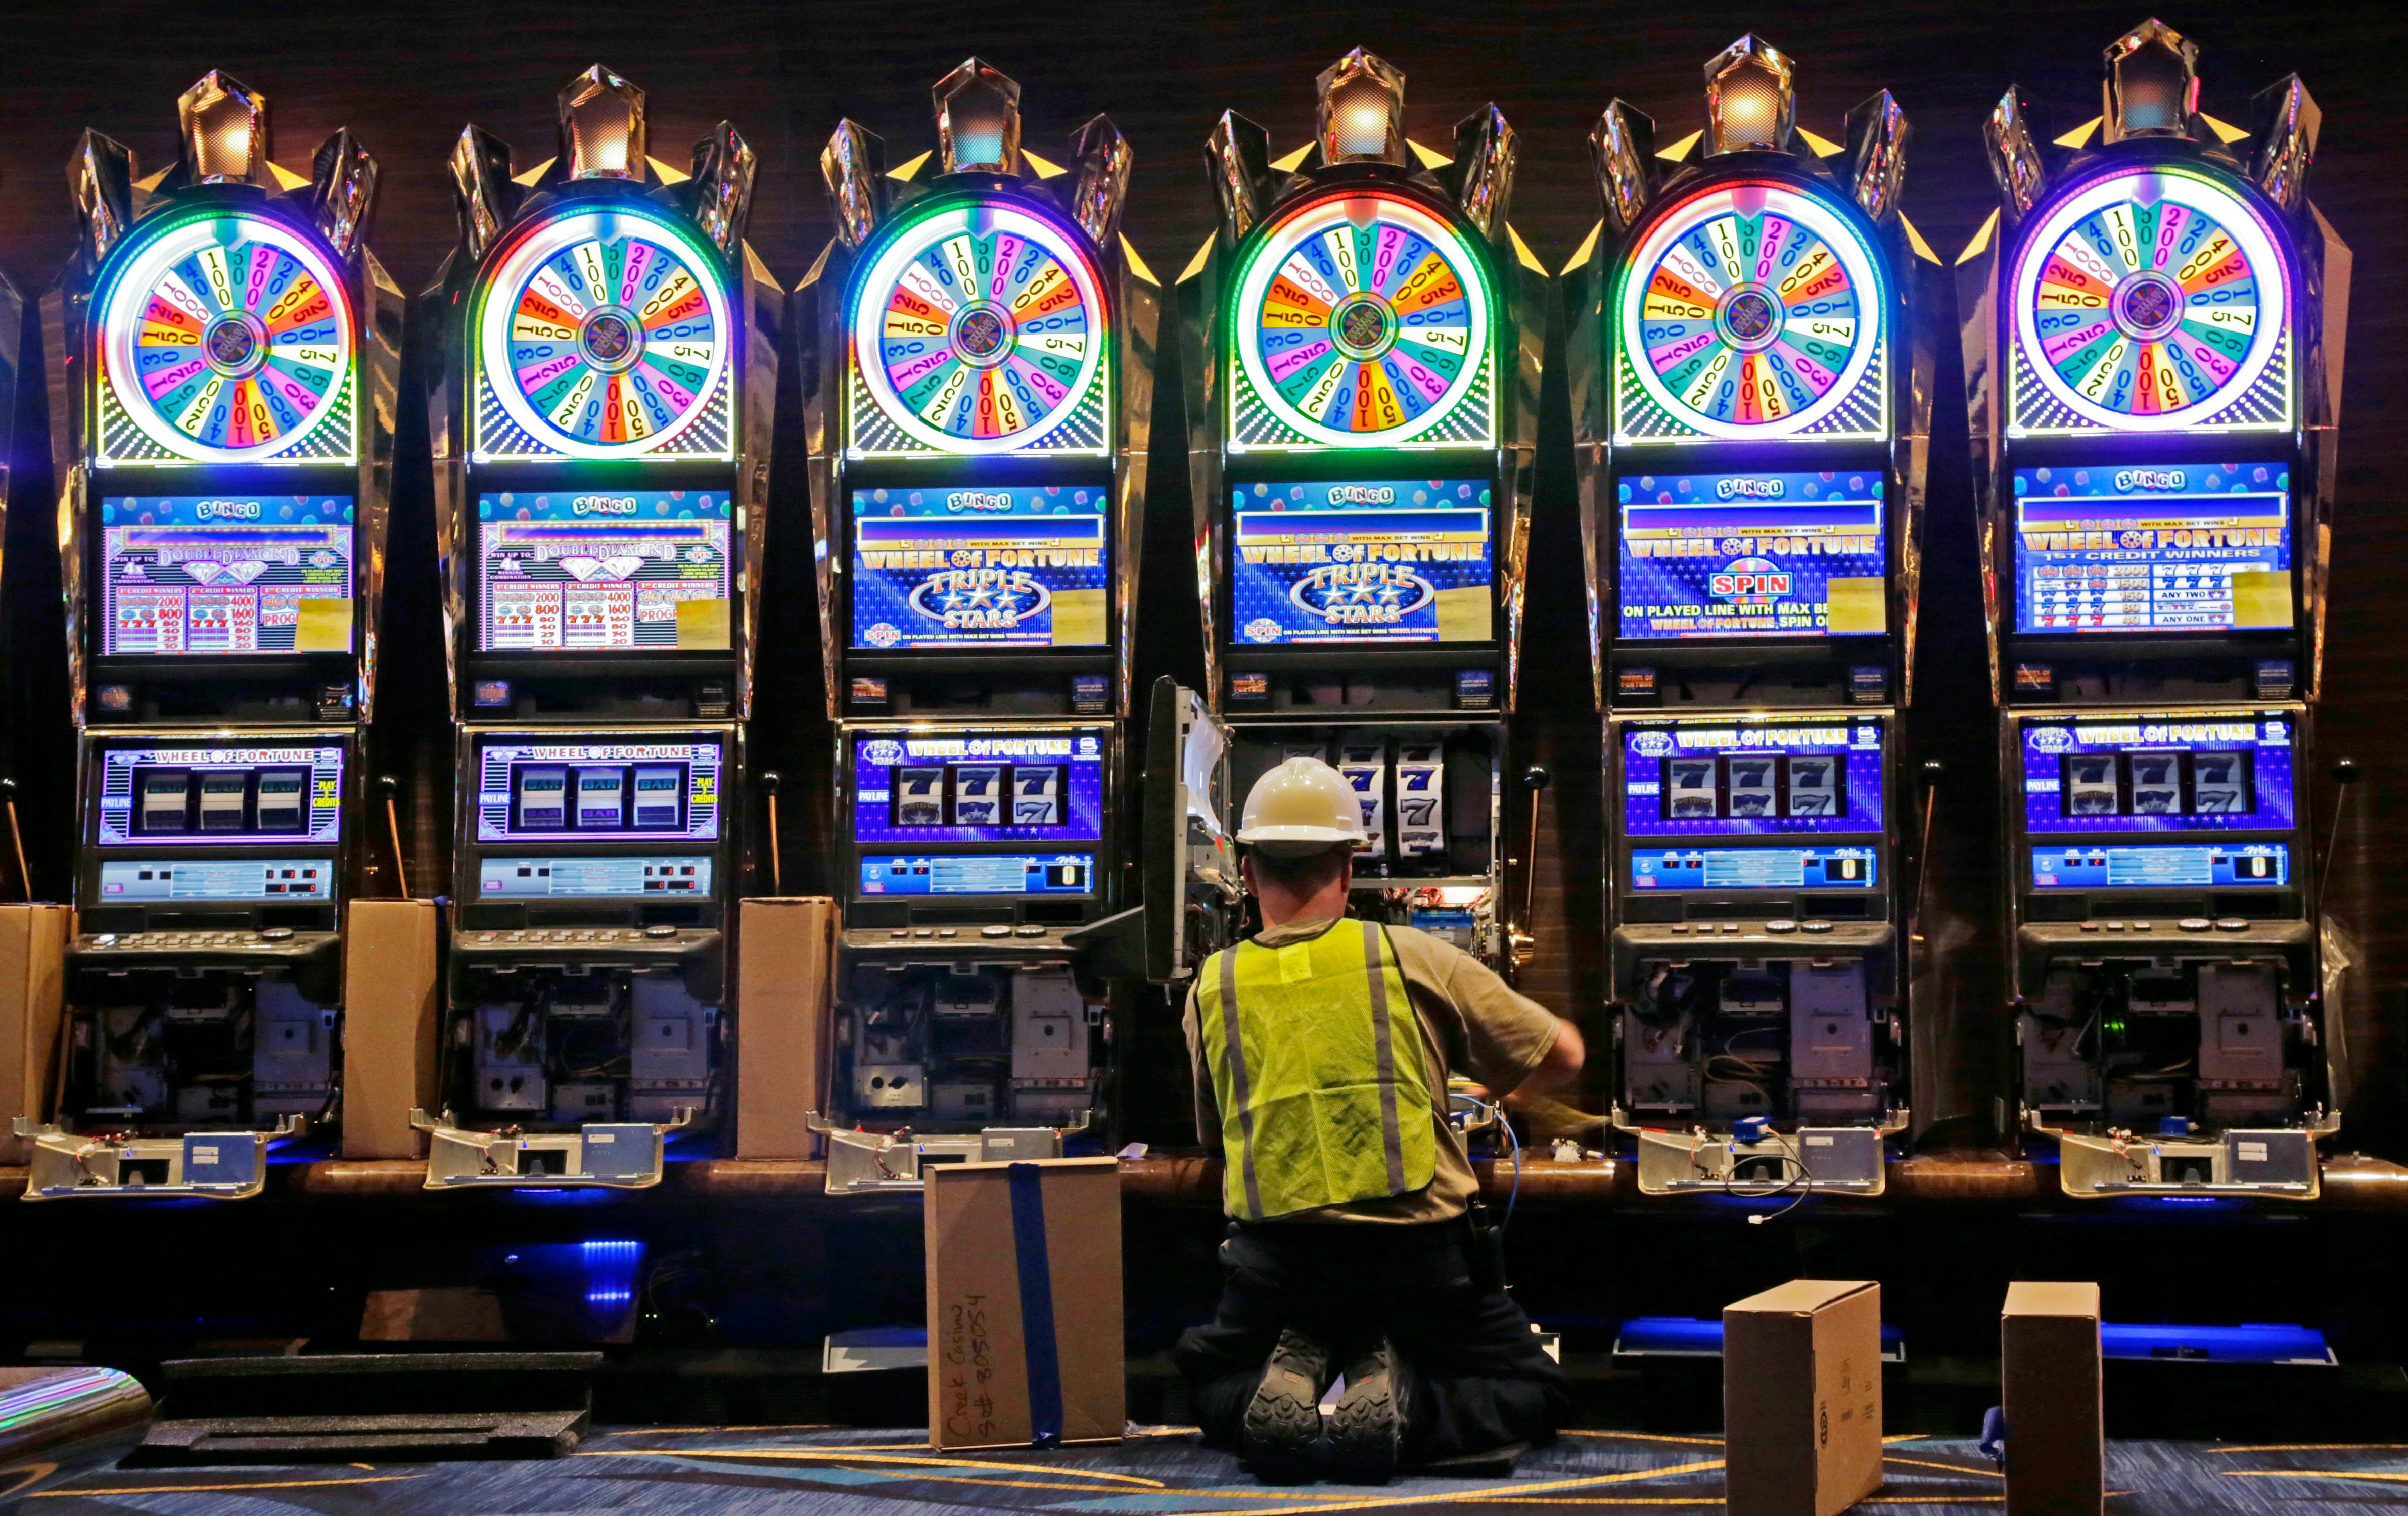 best online casino new york